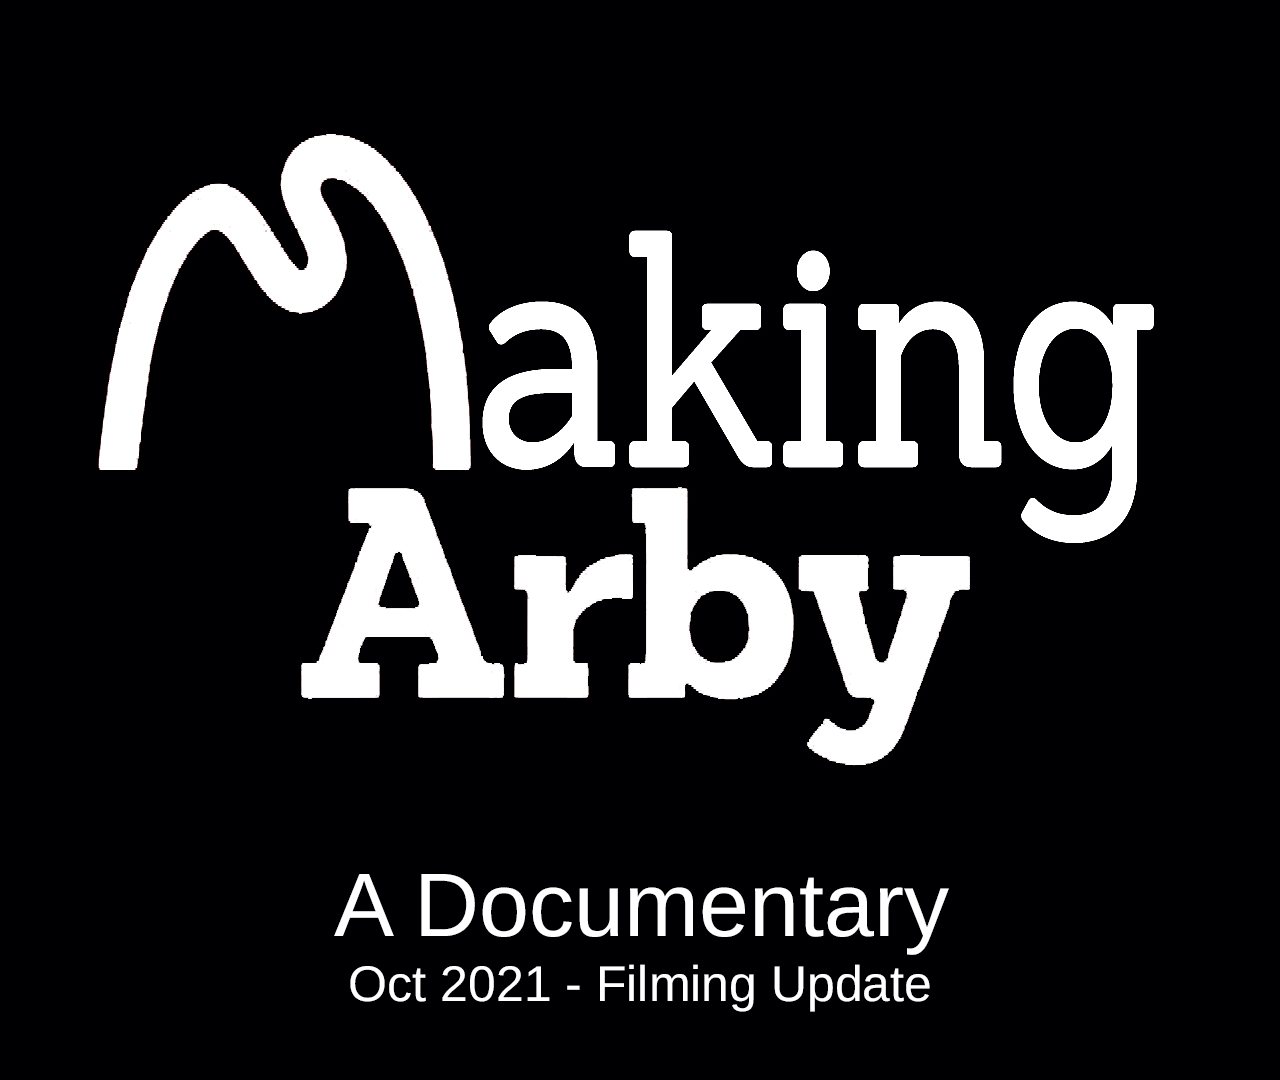 Chris Vaughn's documentary "Feelin' Lucky" was originally called "Making Arby."